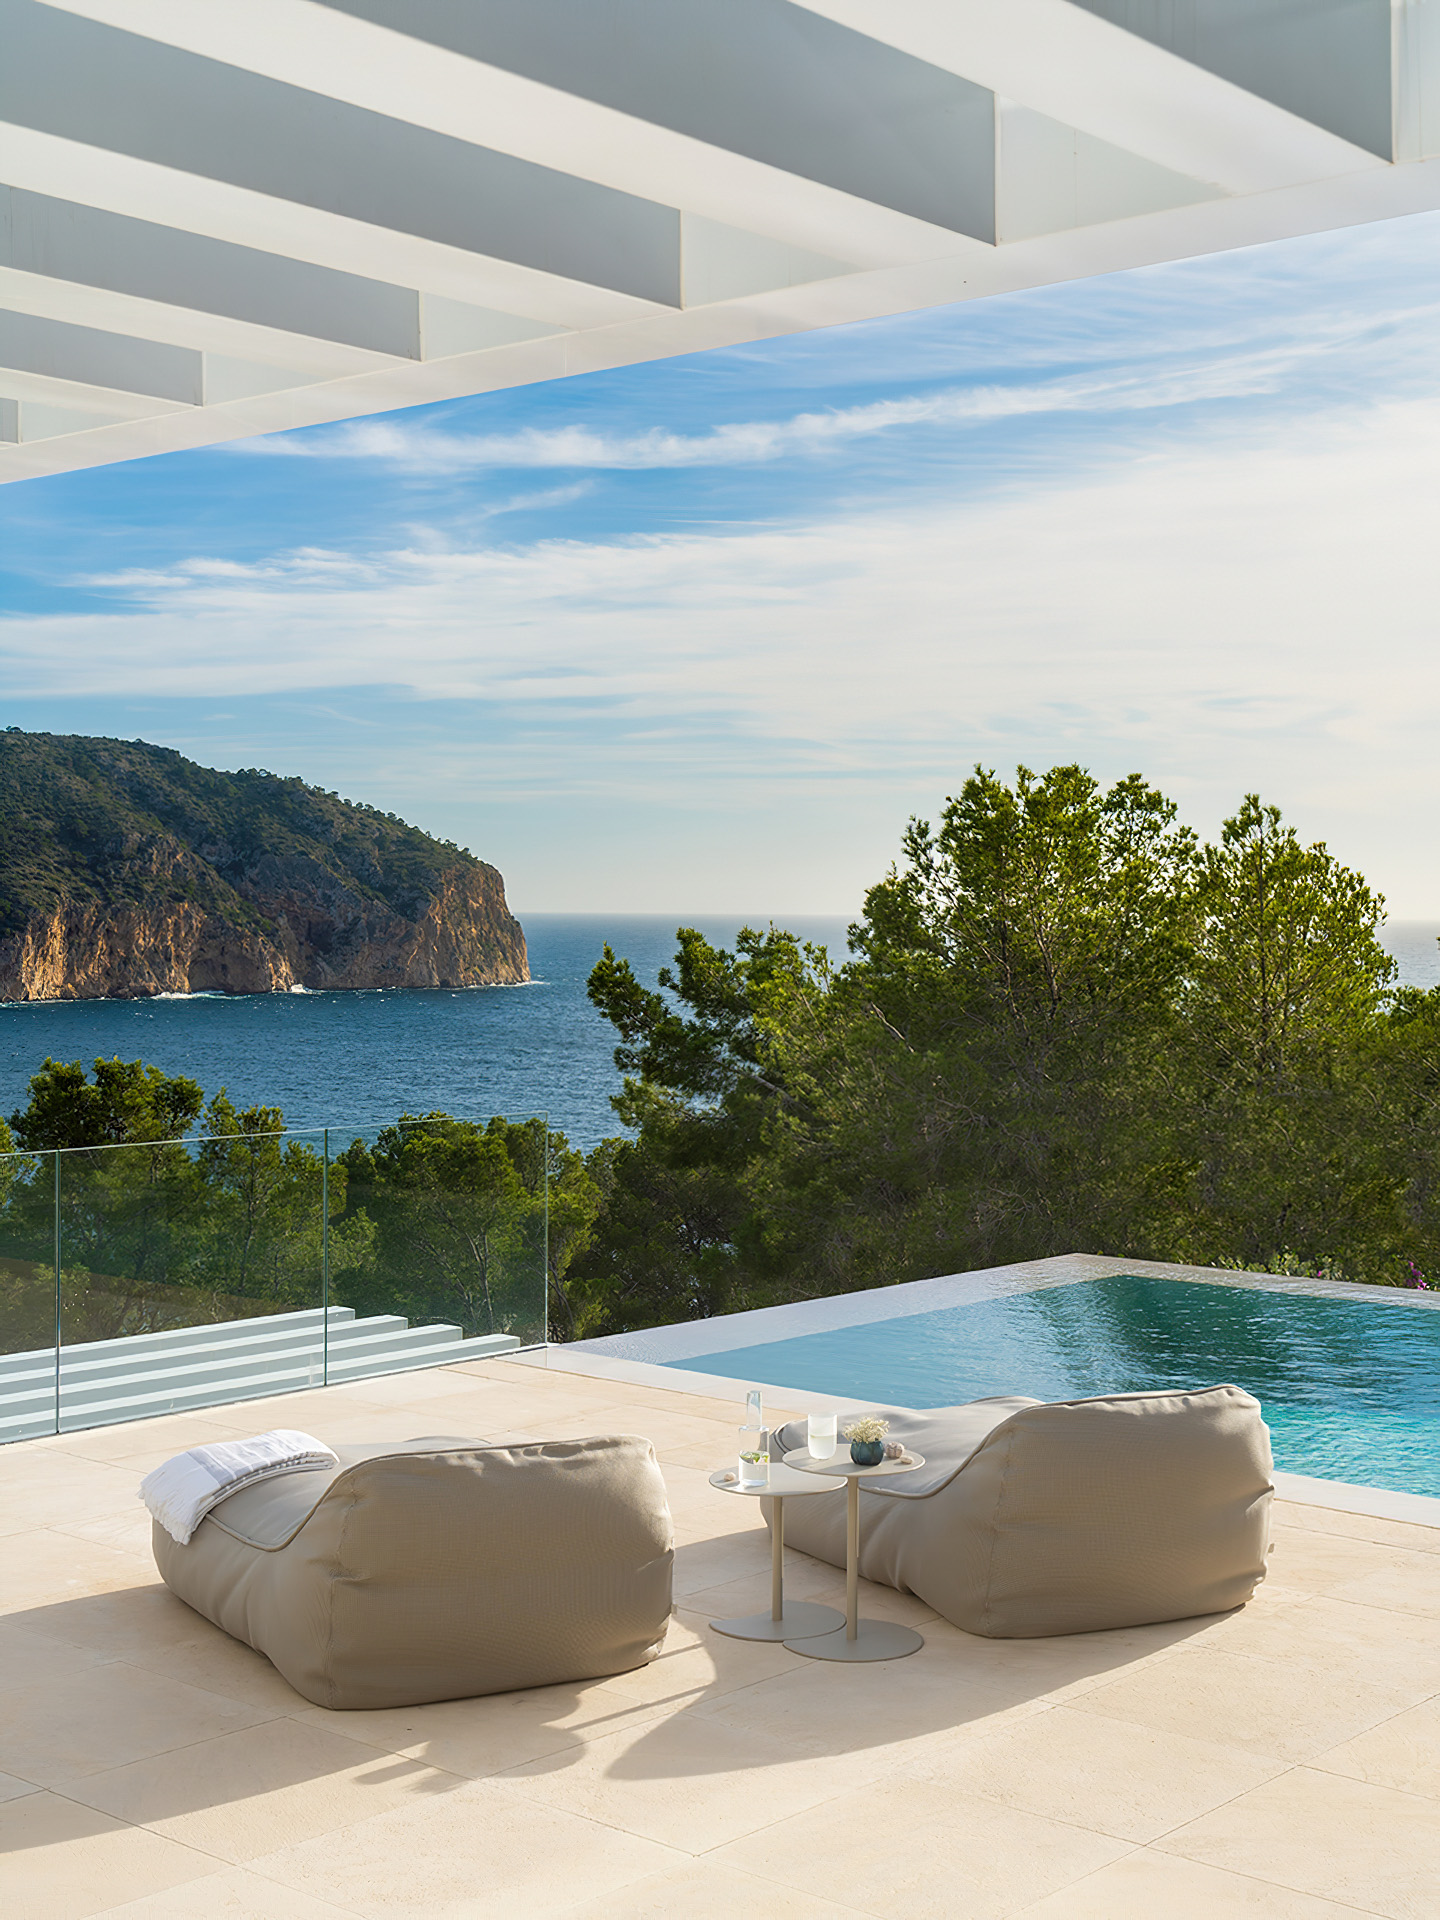 Villa Statera Interior Design Camp de Mar, Mallorca, Spain – Terraza Balear